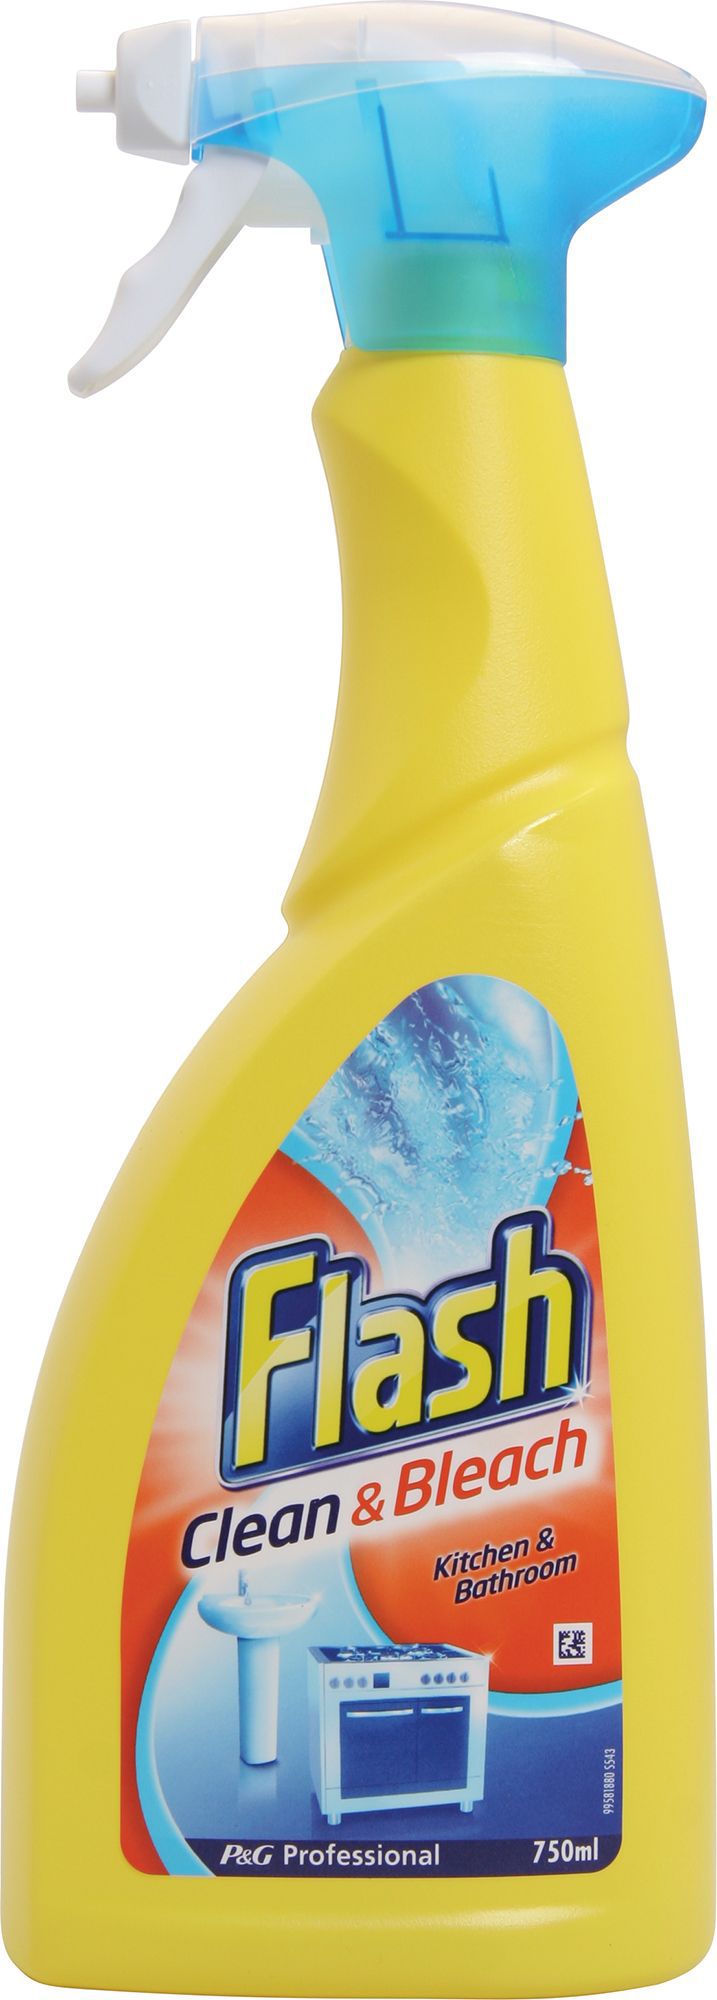 Flash Cleaning spray, 750ml